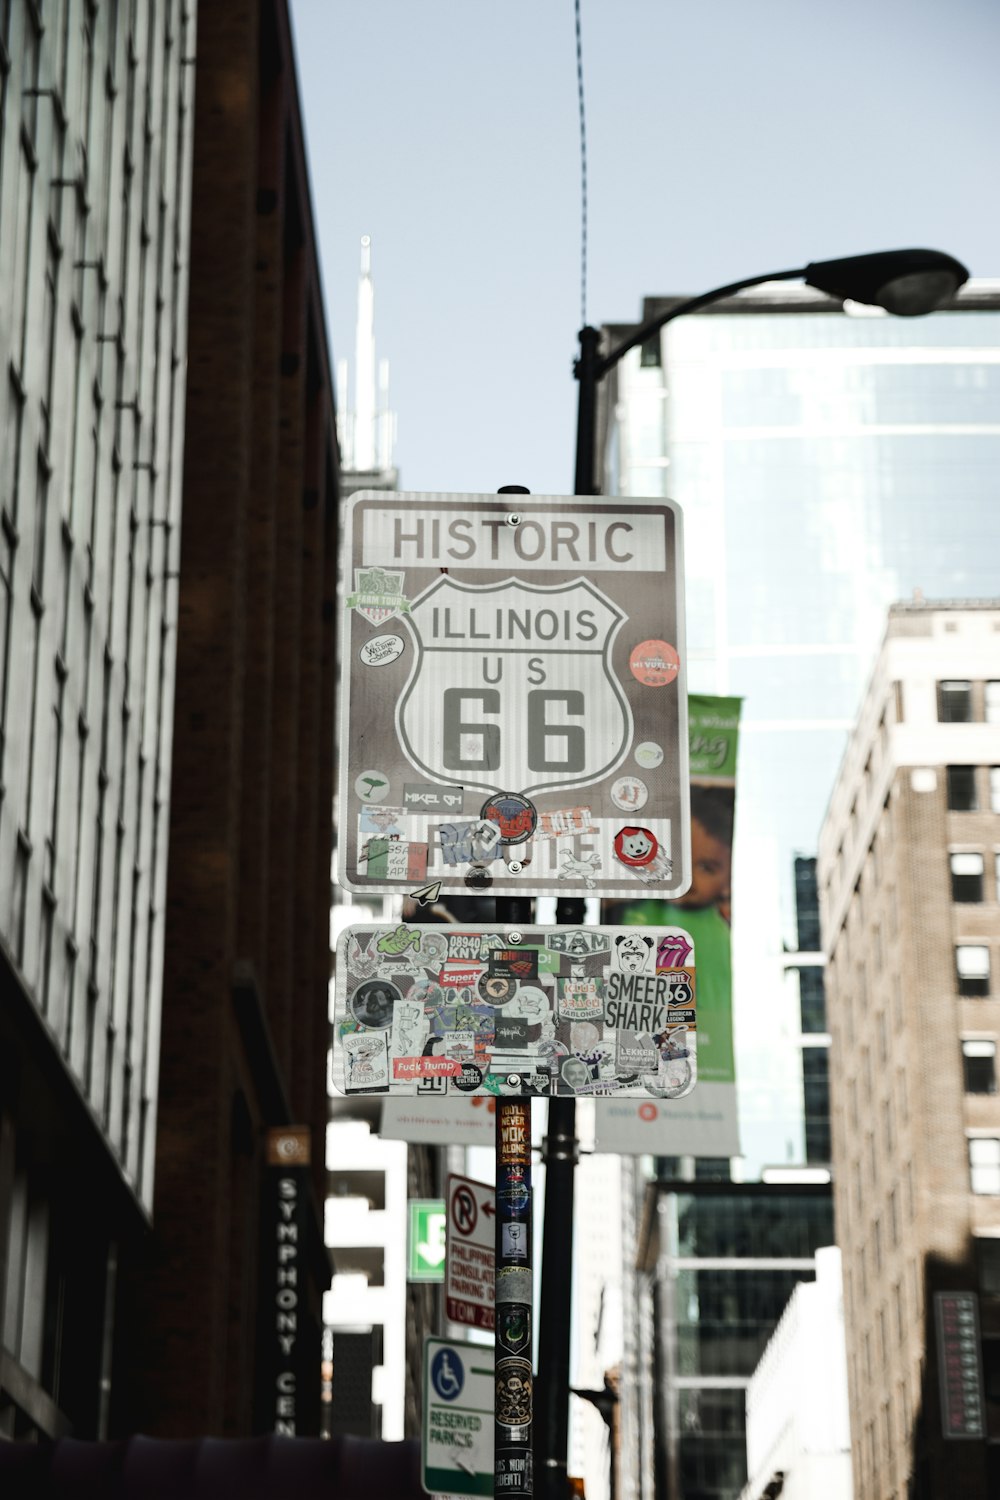 Historic Illinois 66 signage